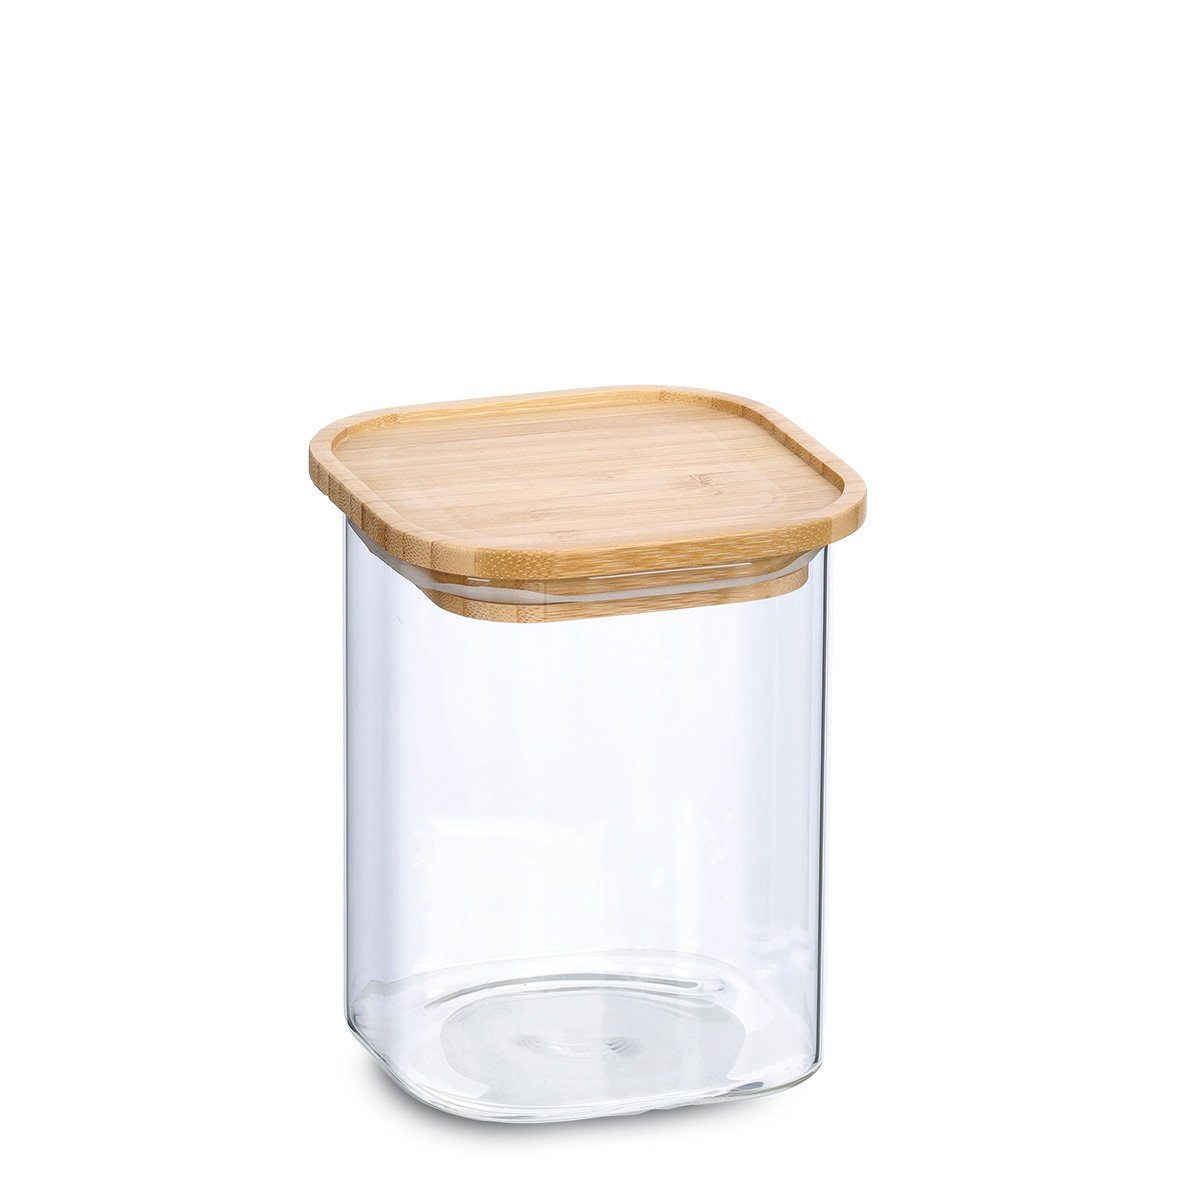 Zeller Present Badaccessoire-Set Vorratsglas m. Bambusdeckel, 900 ml, Borosilikat Glas / Bambus / Silikon, transparent, ca. 10 x 10 x 13,6 cm